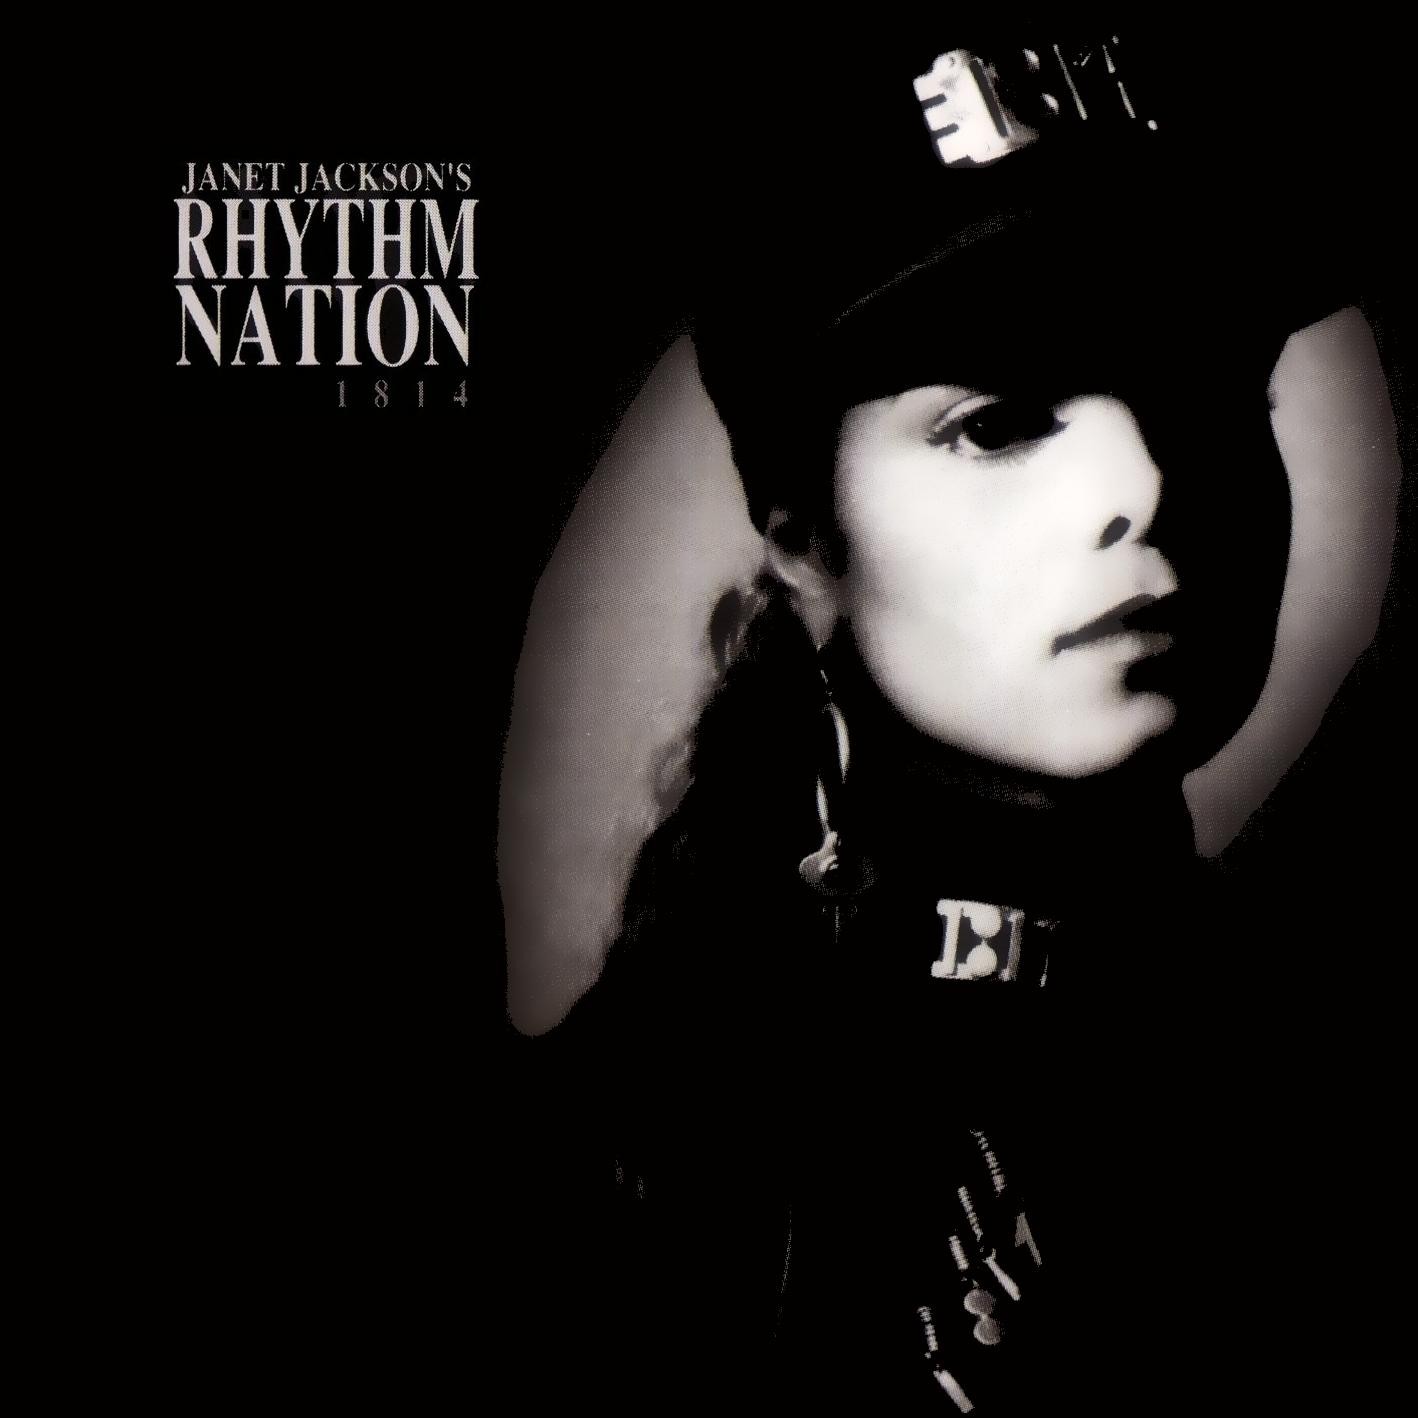 http://4.bp.blogspot.com/-97K0MCvIca8/T0YvrAkplHI/AAAAAAAABZk/ZSfy4LLrIQU/s1600/Janet+Jackson+-+Rhythm+Nation+1814.jpg